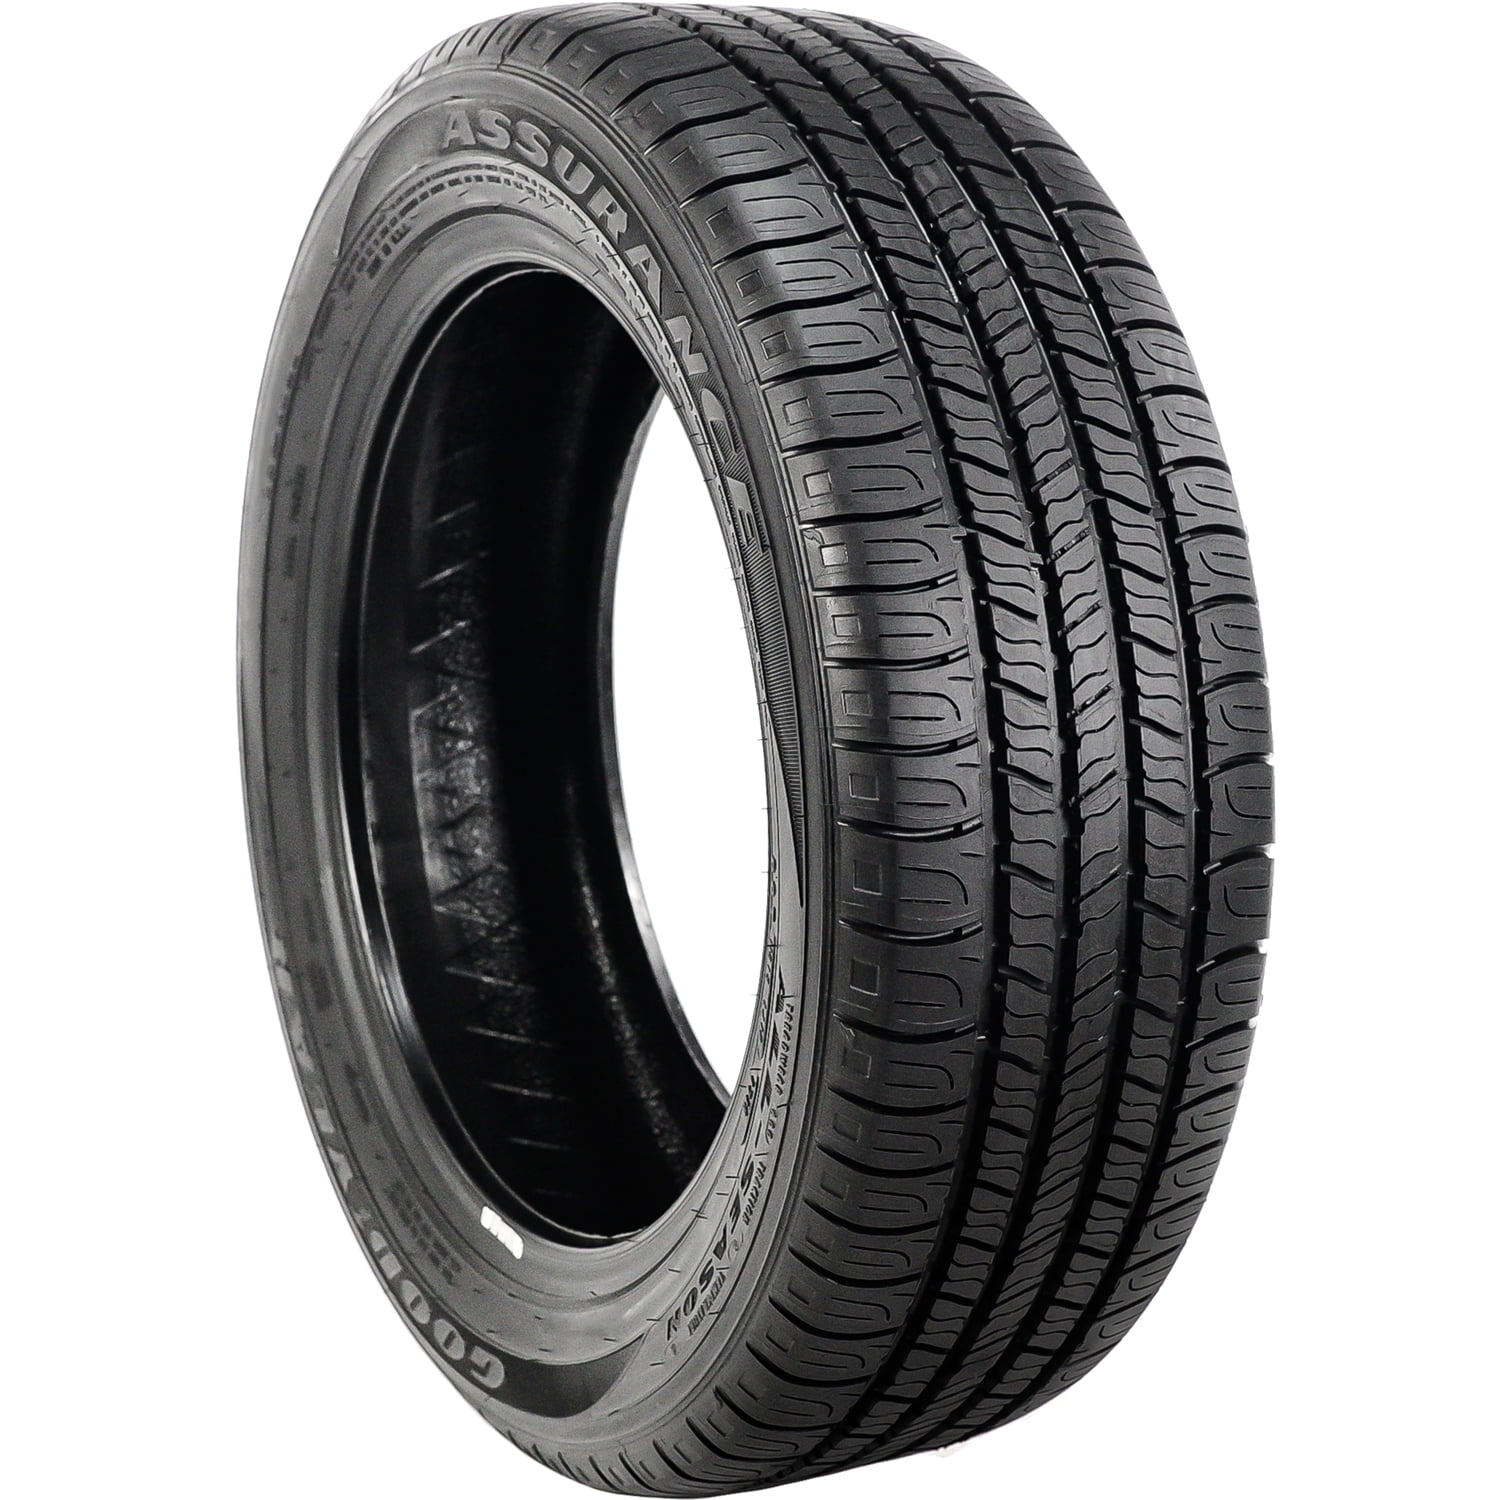 Goodyear Assurance All-Season 235/60R17 T 102 Tire